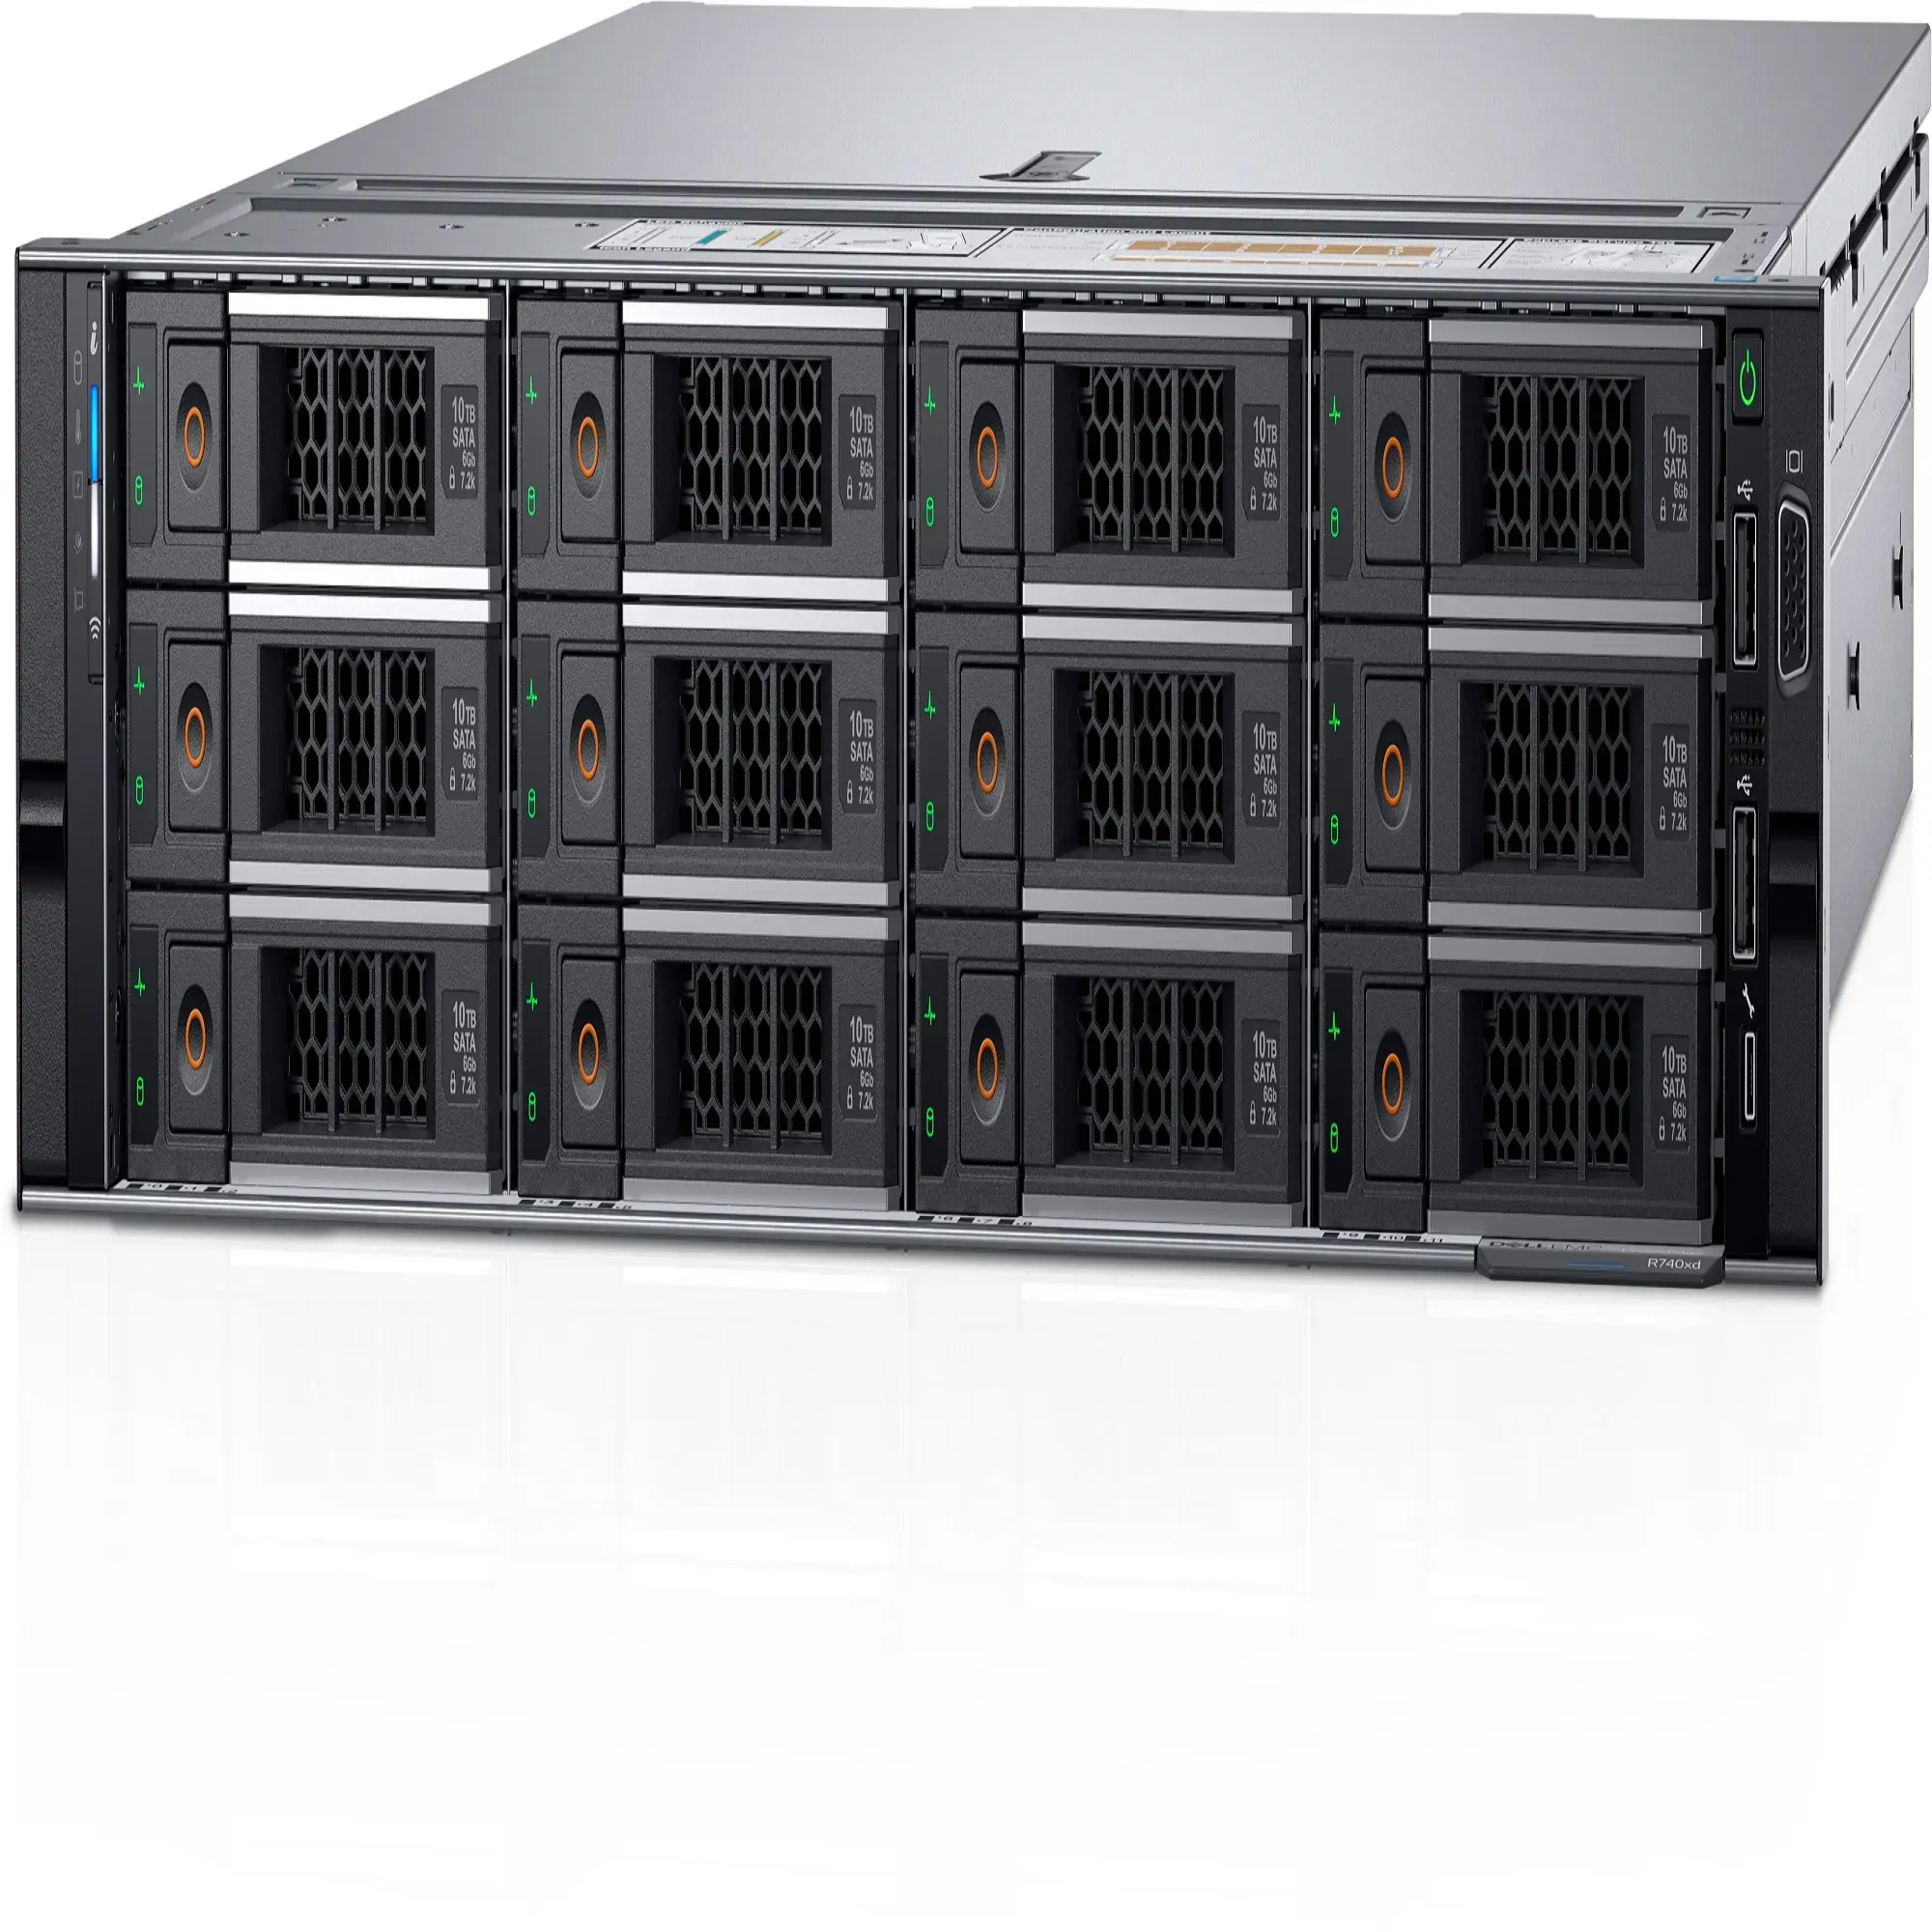 New R740 Intelligent Machine switches Giigabit Ethernet 2U Rack Server